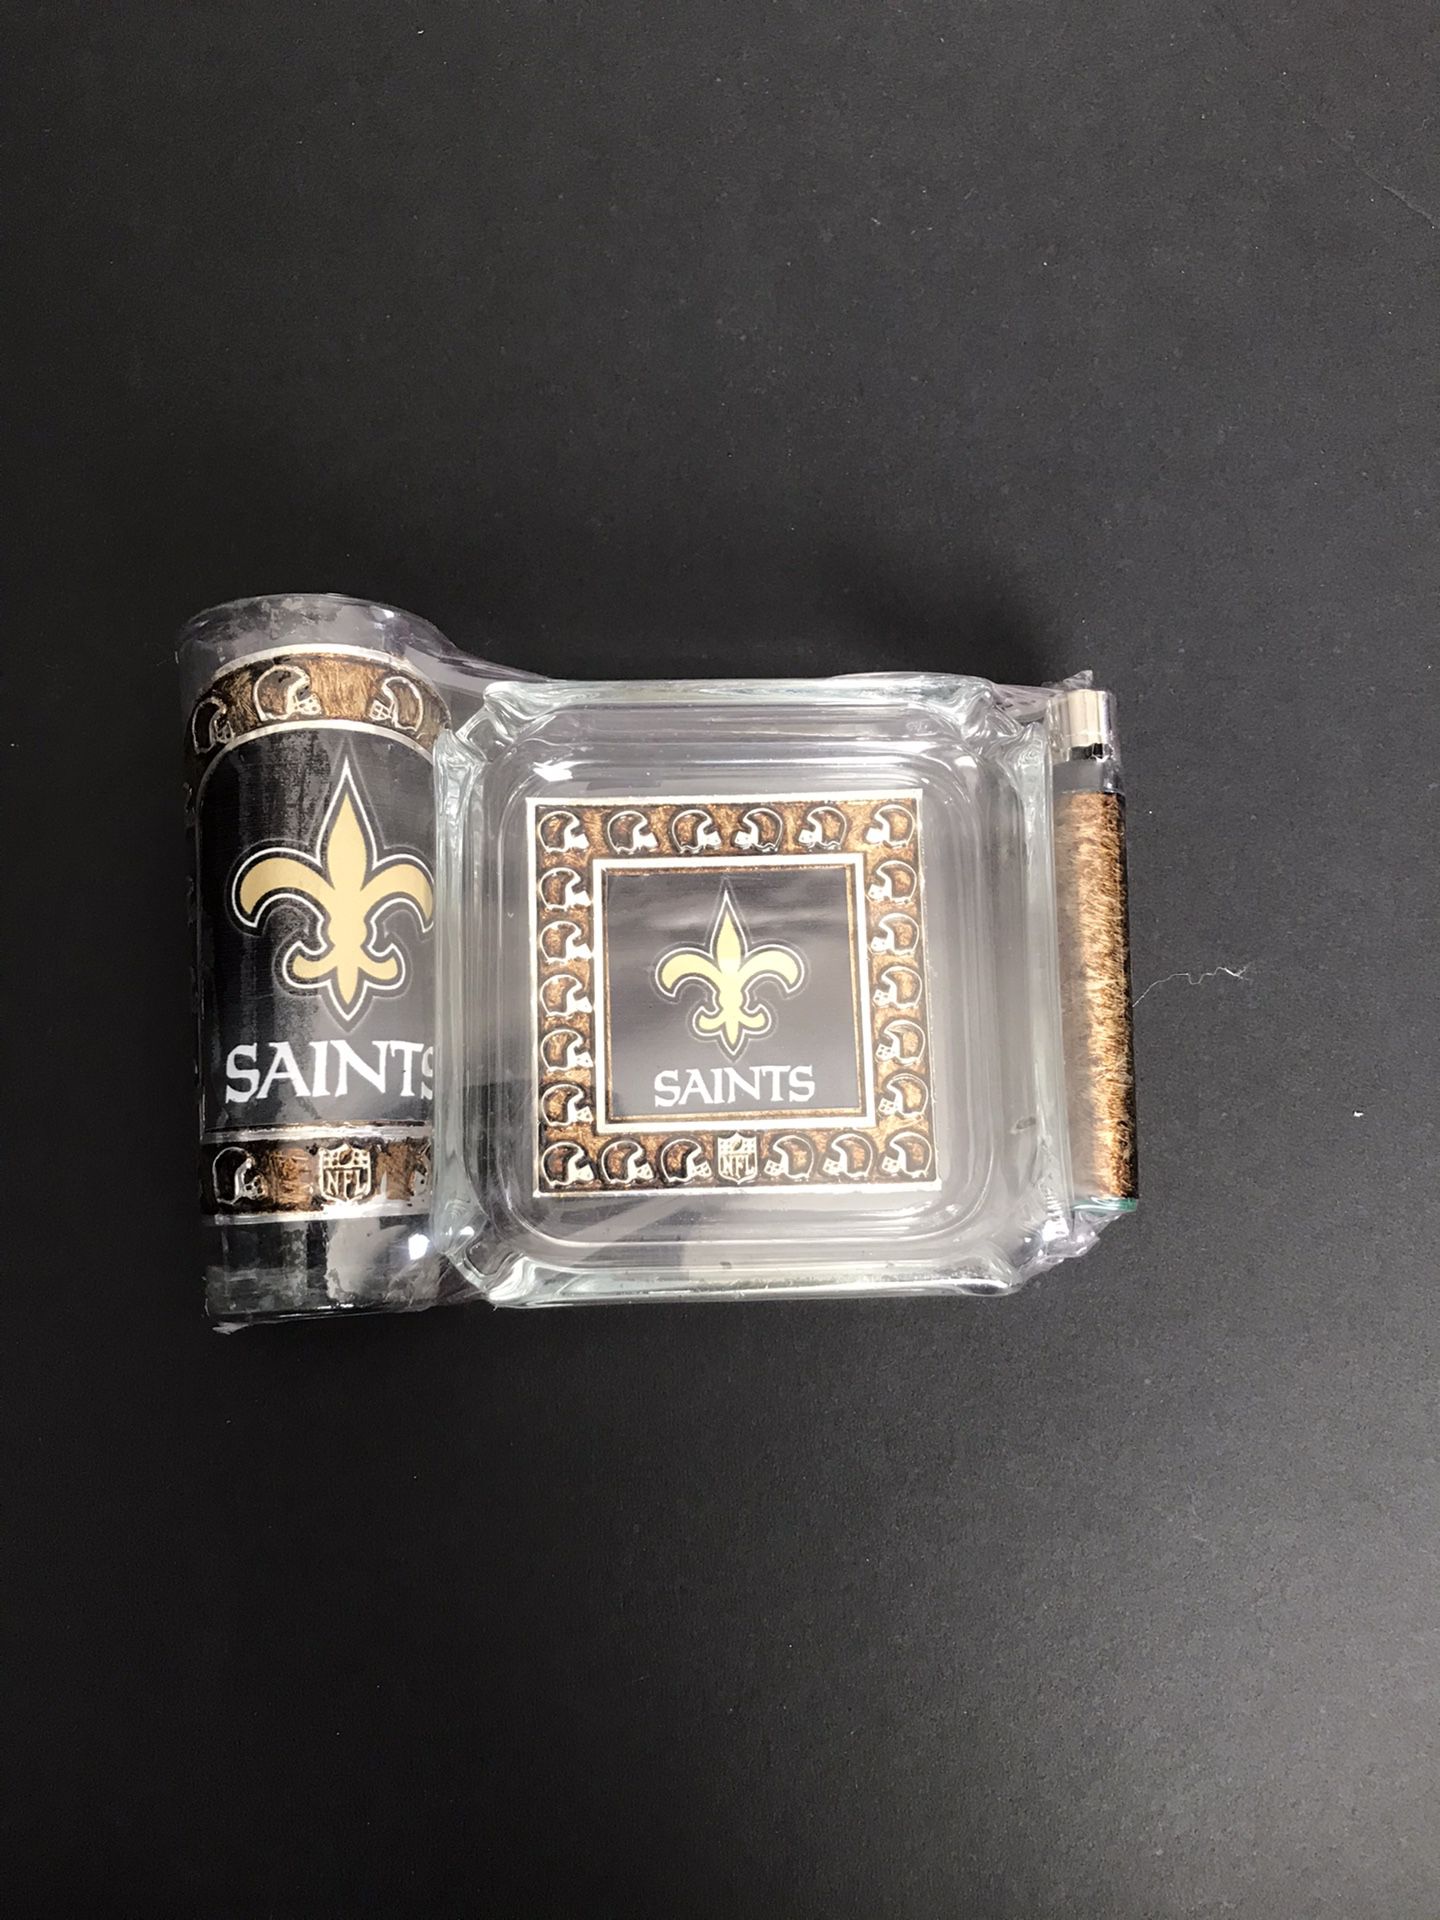 New Orleans Saints ashtray set